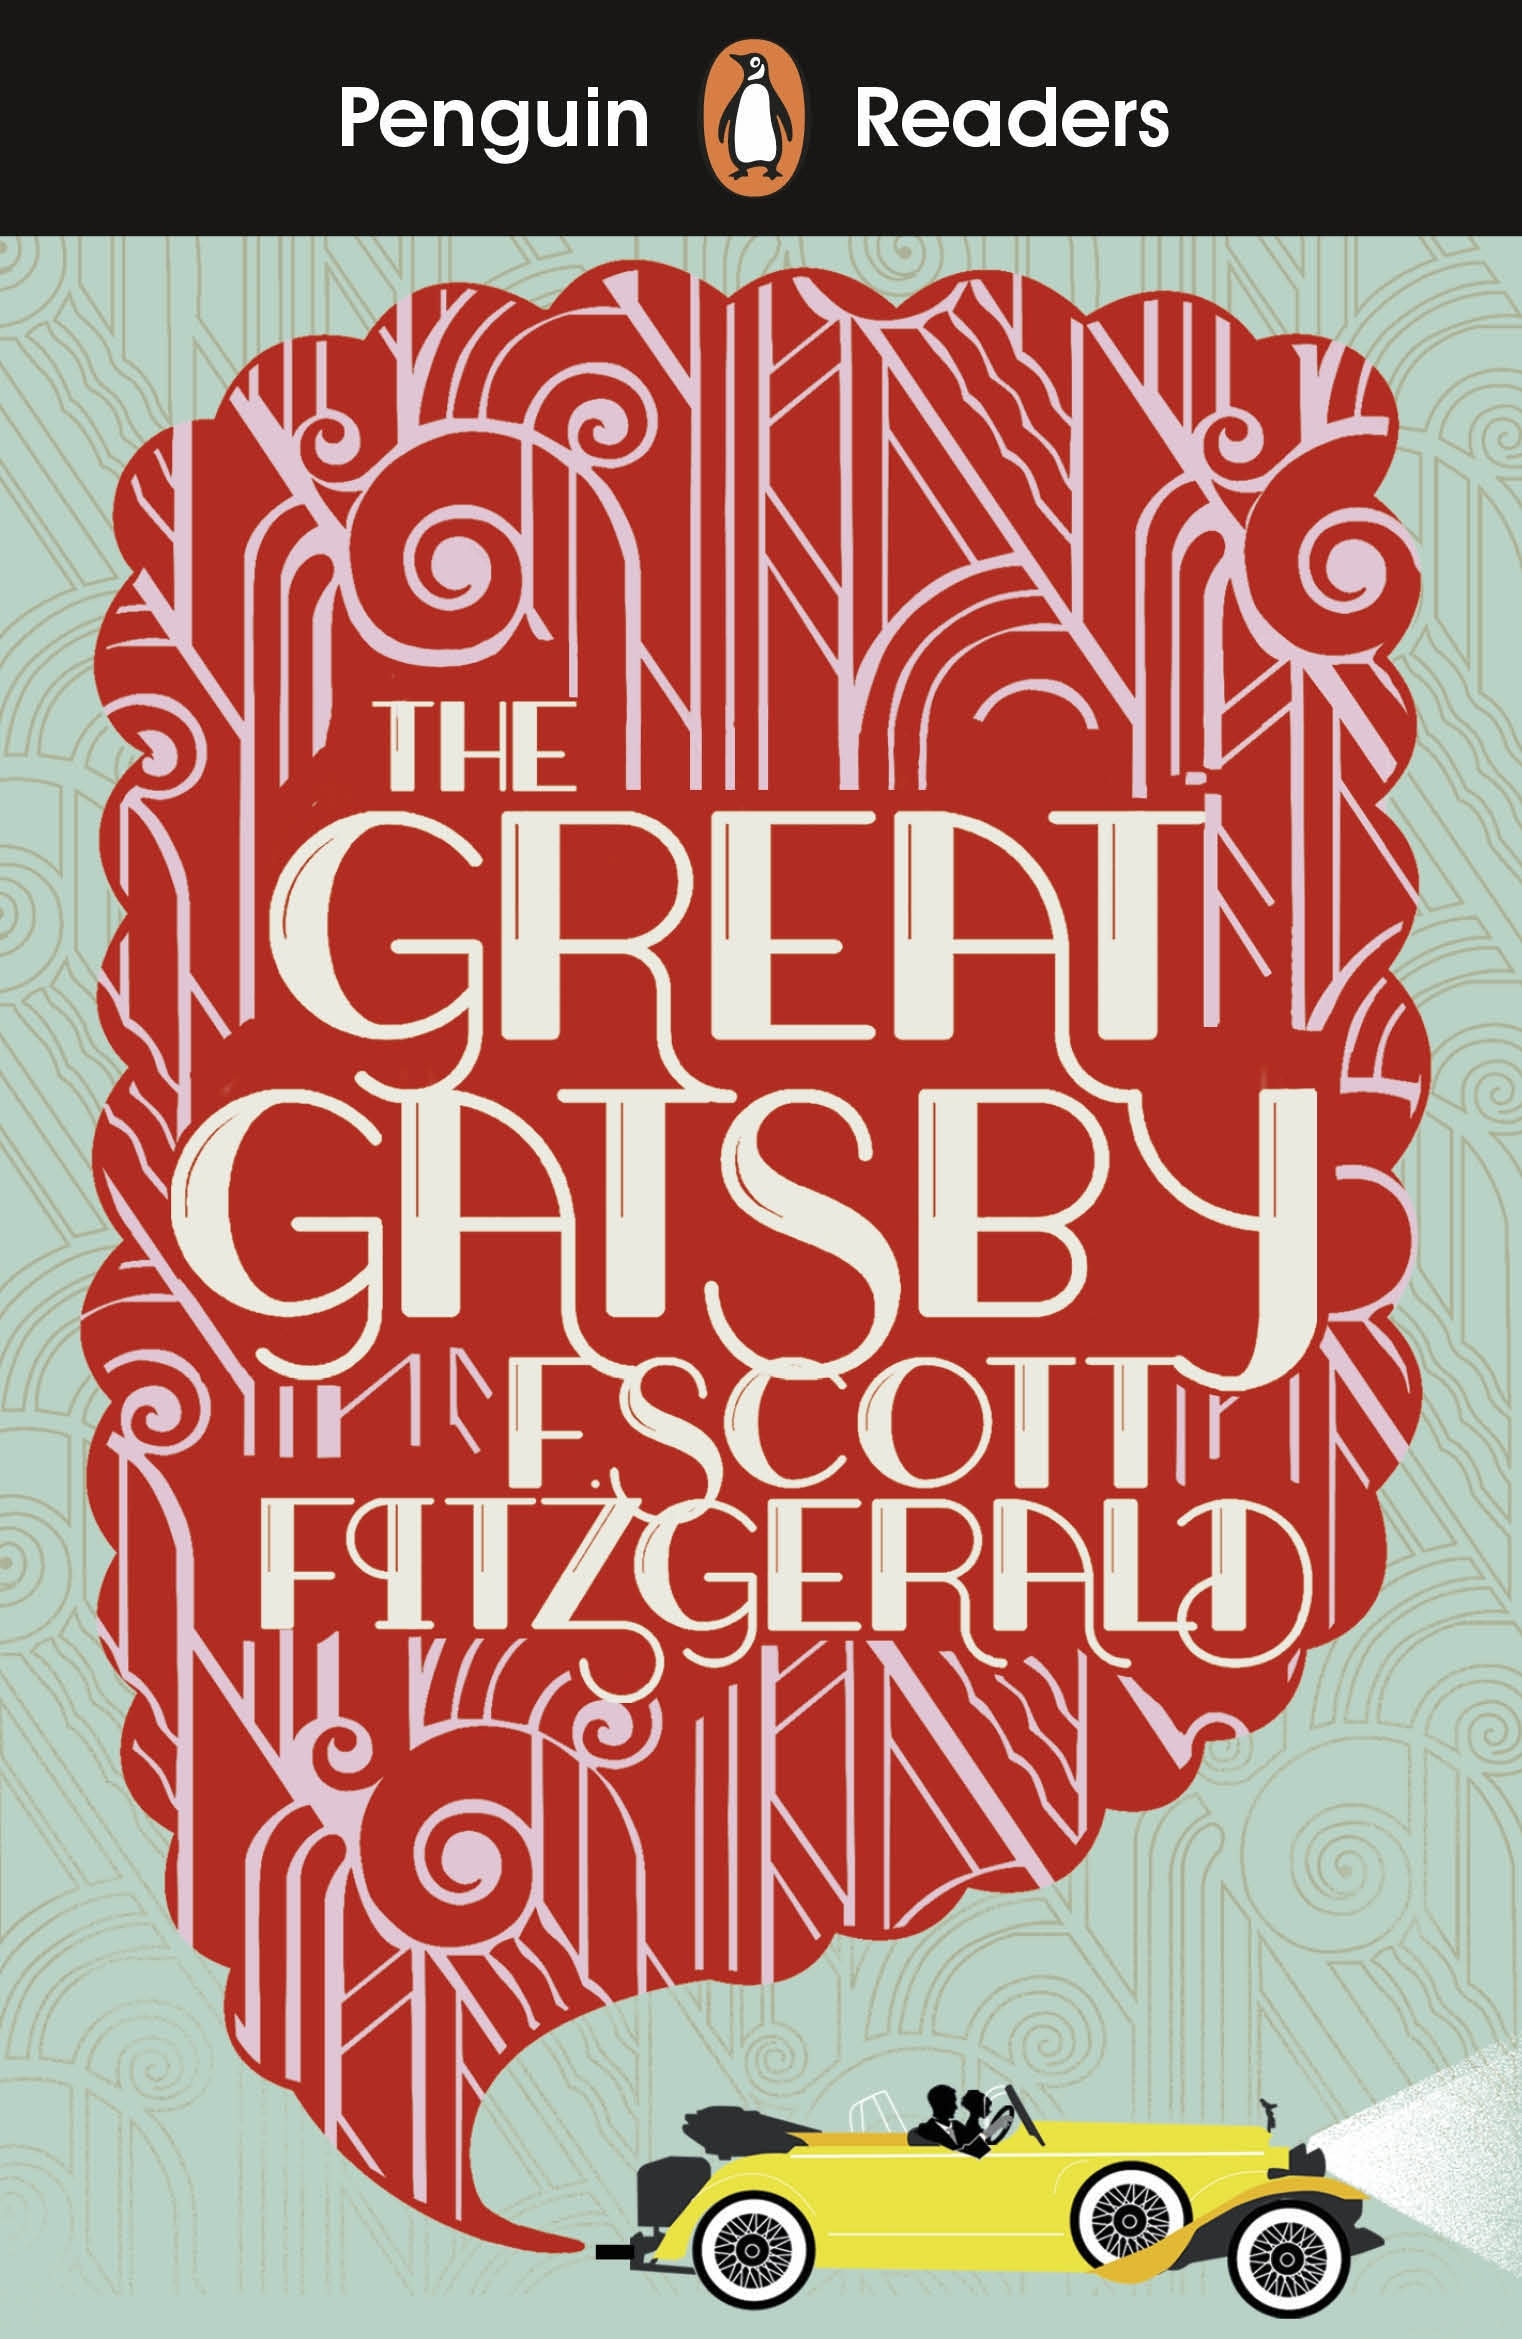 Book “Penguin Readers Level 3: The Great Gatsby (ELT Graded Reader)” by F. Scott Fitzgerald — September 5, 2019